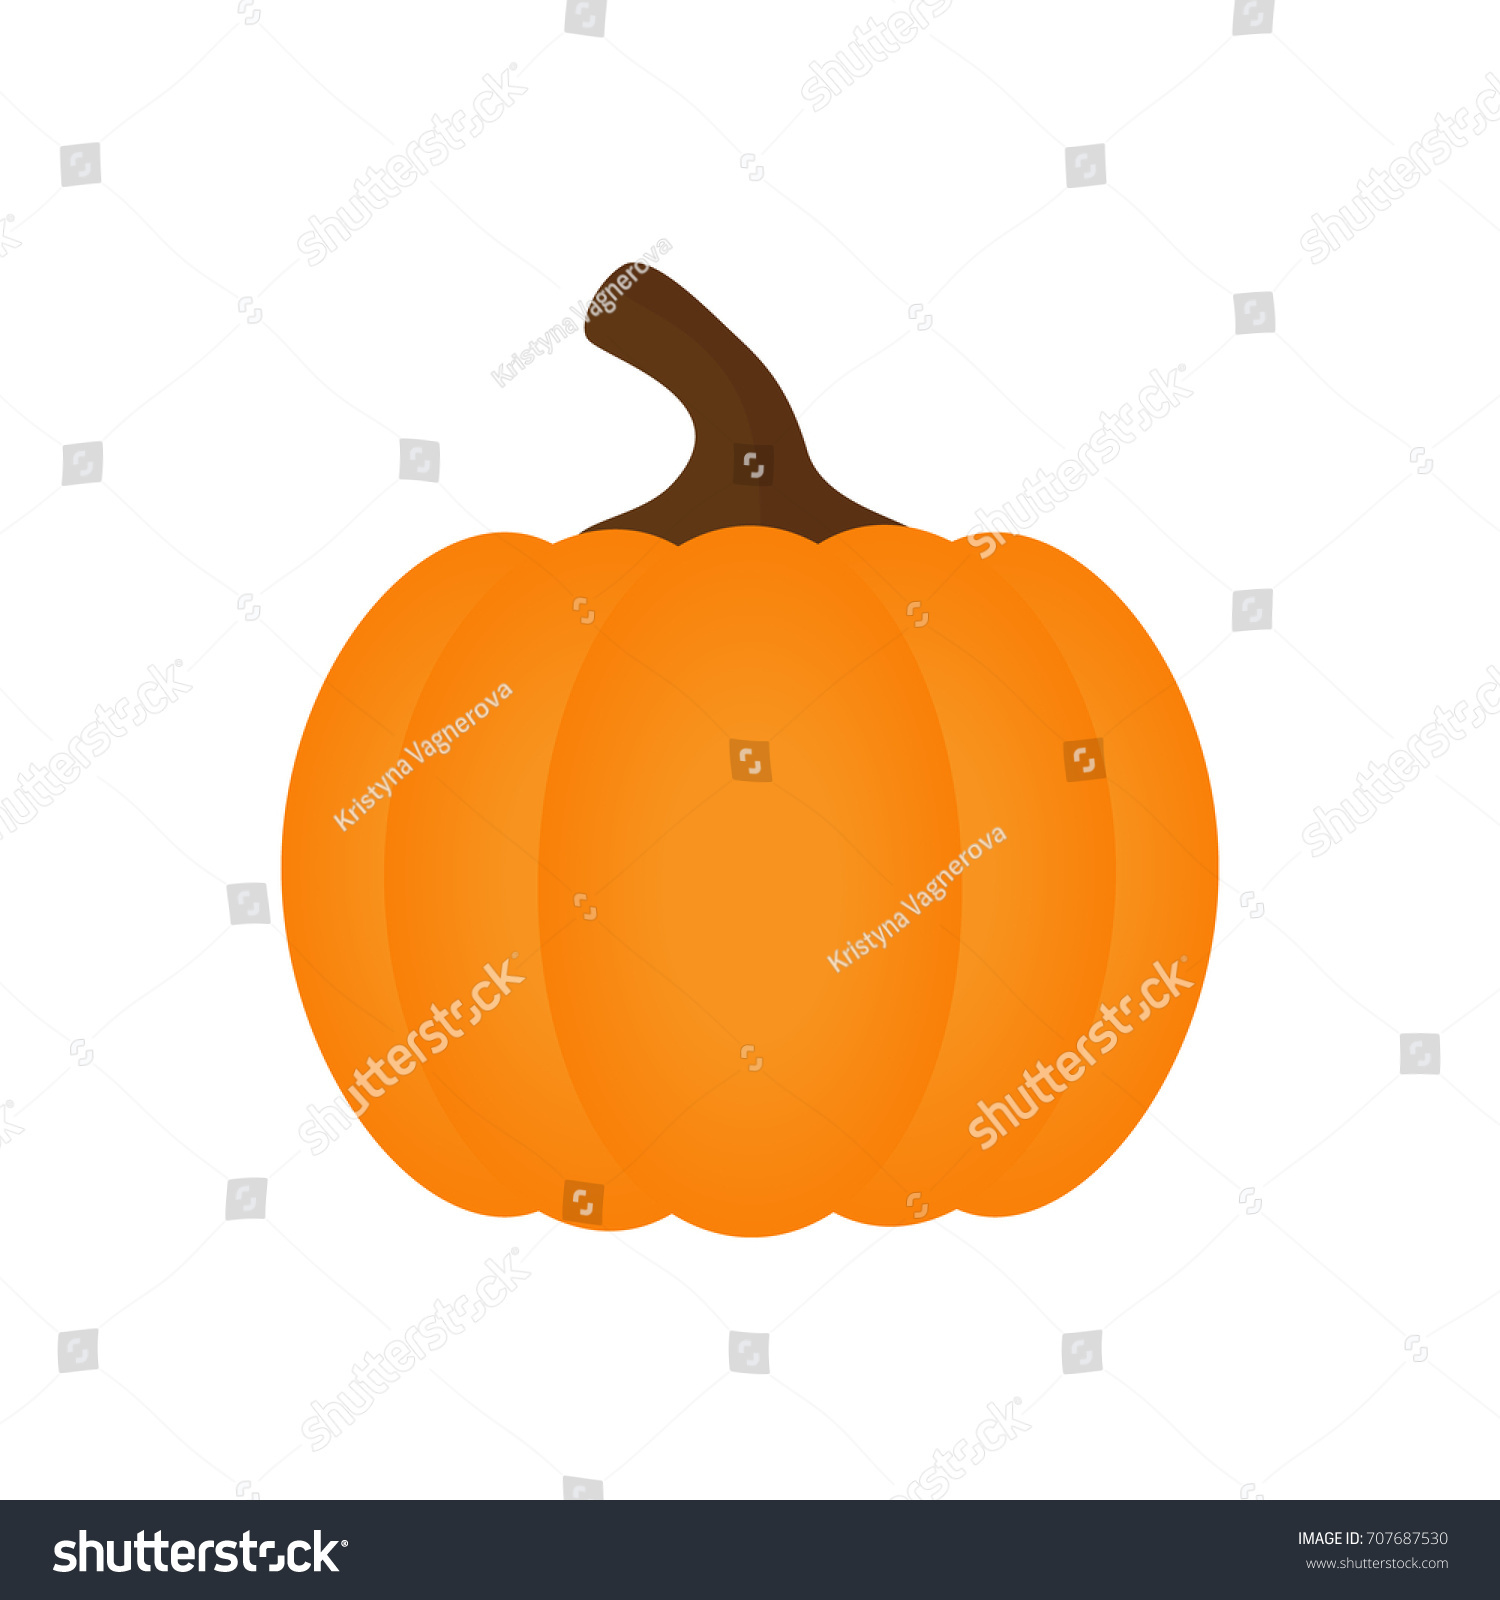 Orange pumpkin vector illustration. Autumn halloween pumpkin, vegetable graphic icon or print, isolated on white background.  #707687530